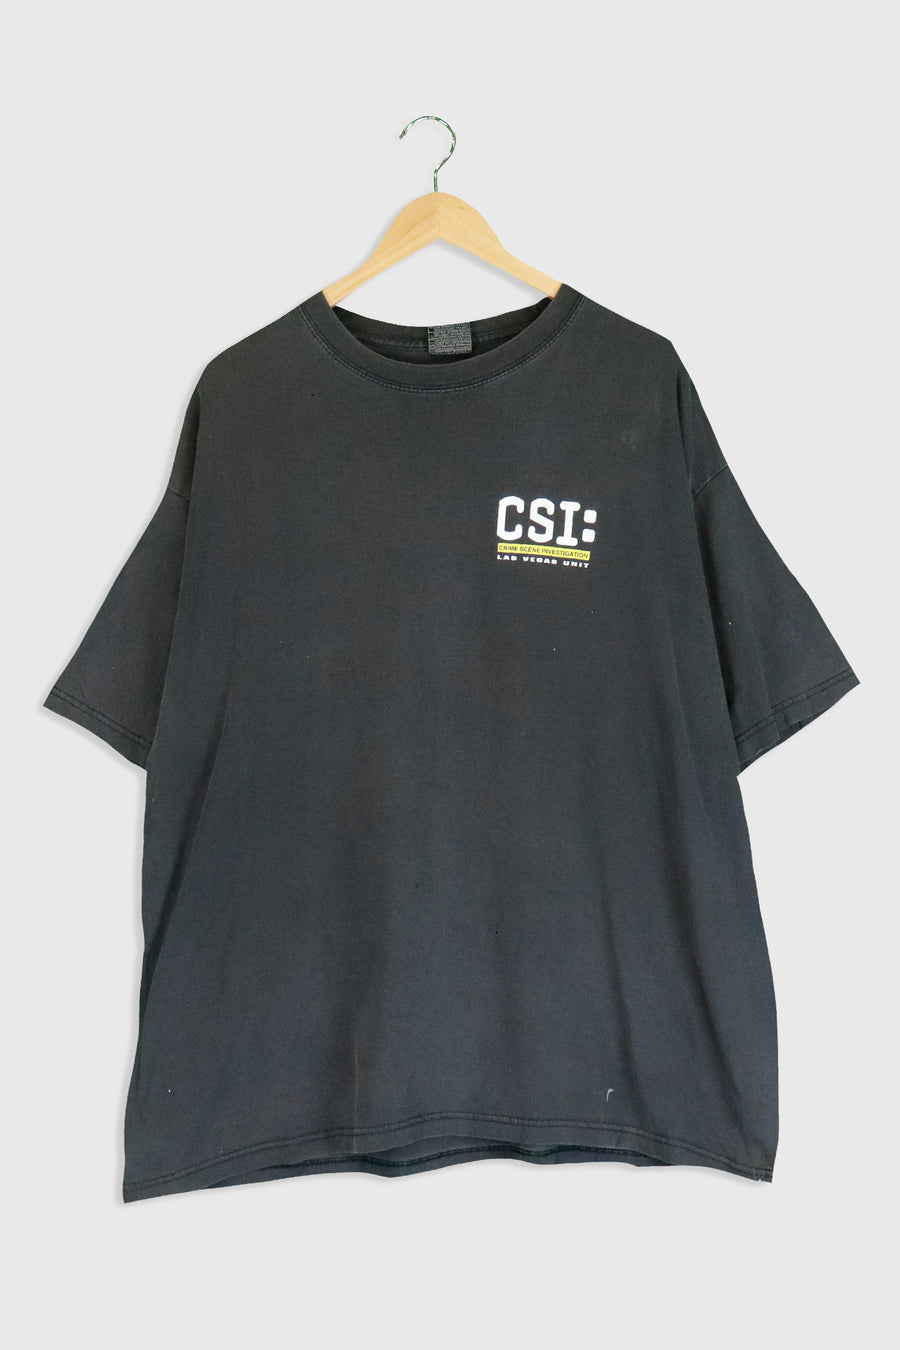 Vintage CSI Crime Scene Las Vegas Unit T Shirt Sz 2XL